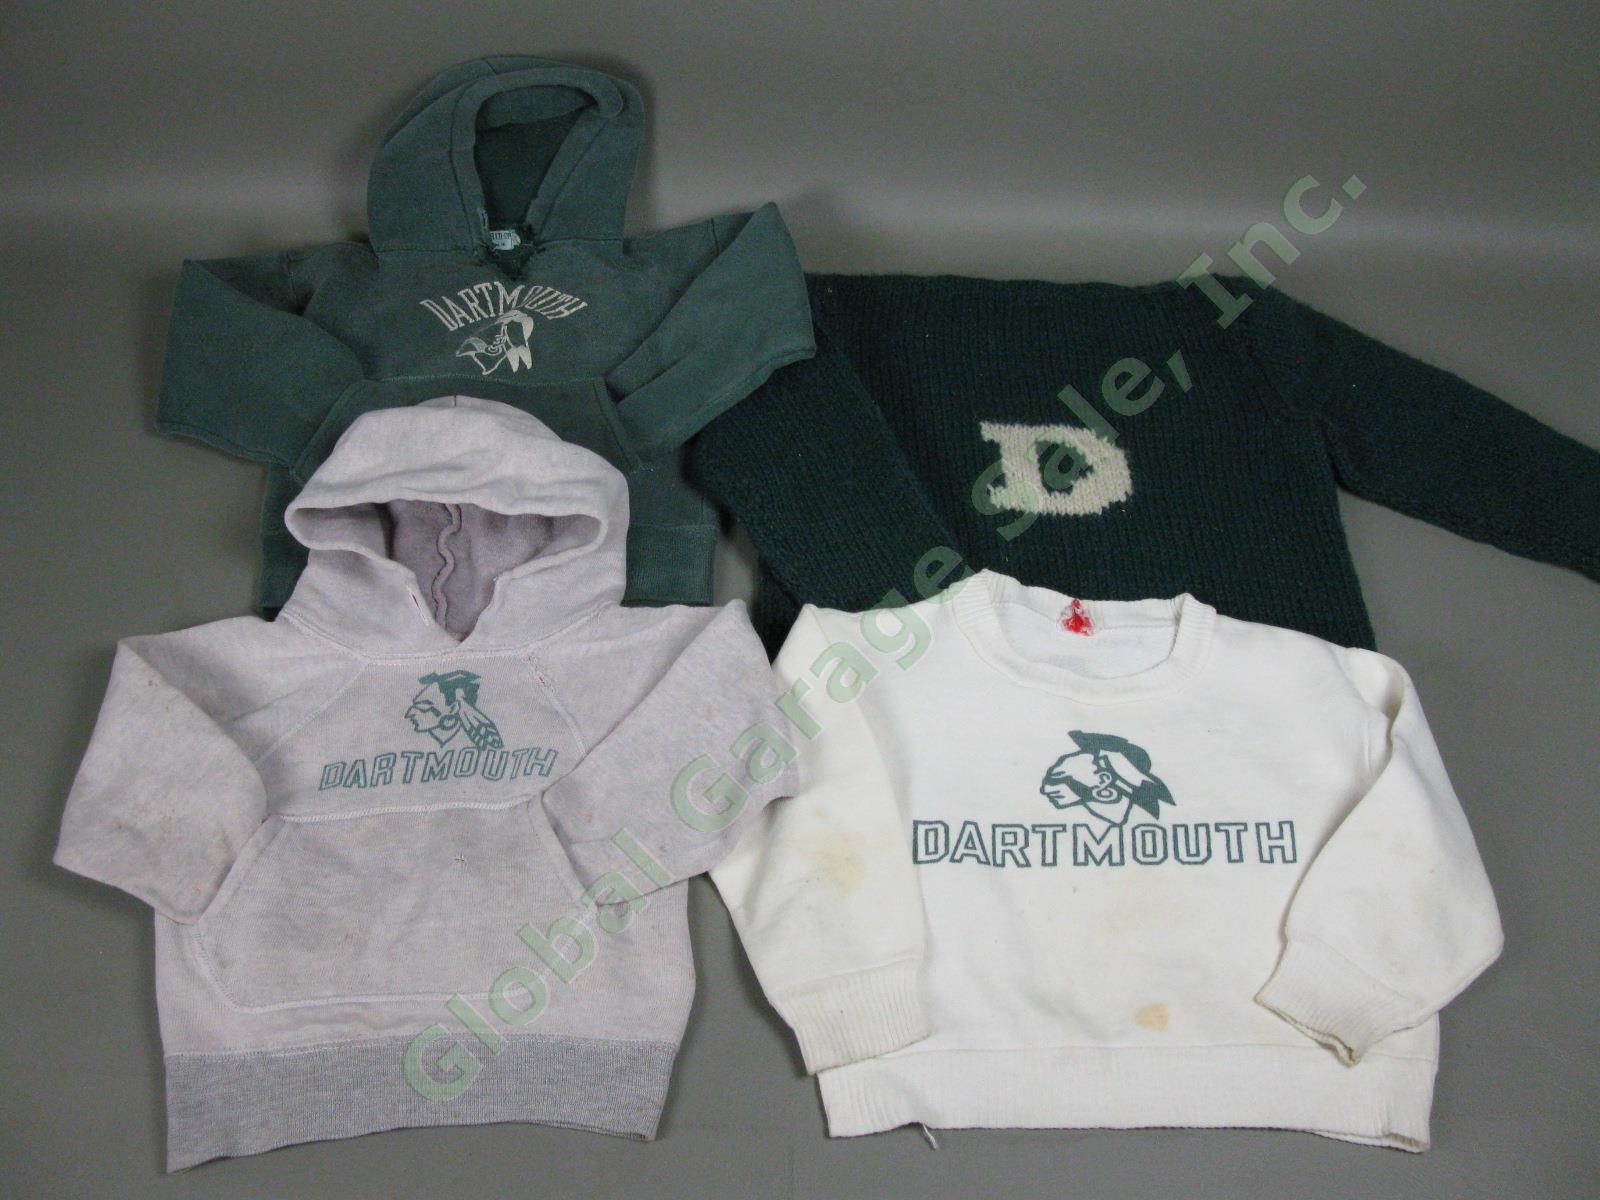 4 Vintage Dartmouth Kids Sweatshirt Sweater Lot Hanover NH Indian Mascot Logo NR